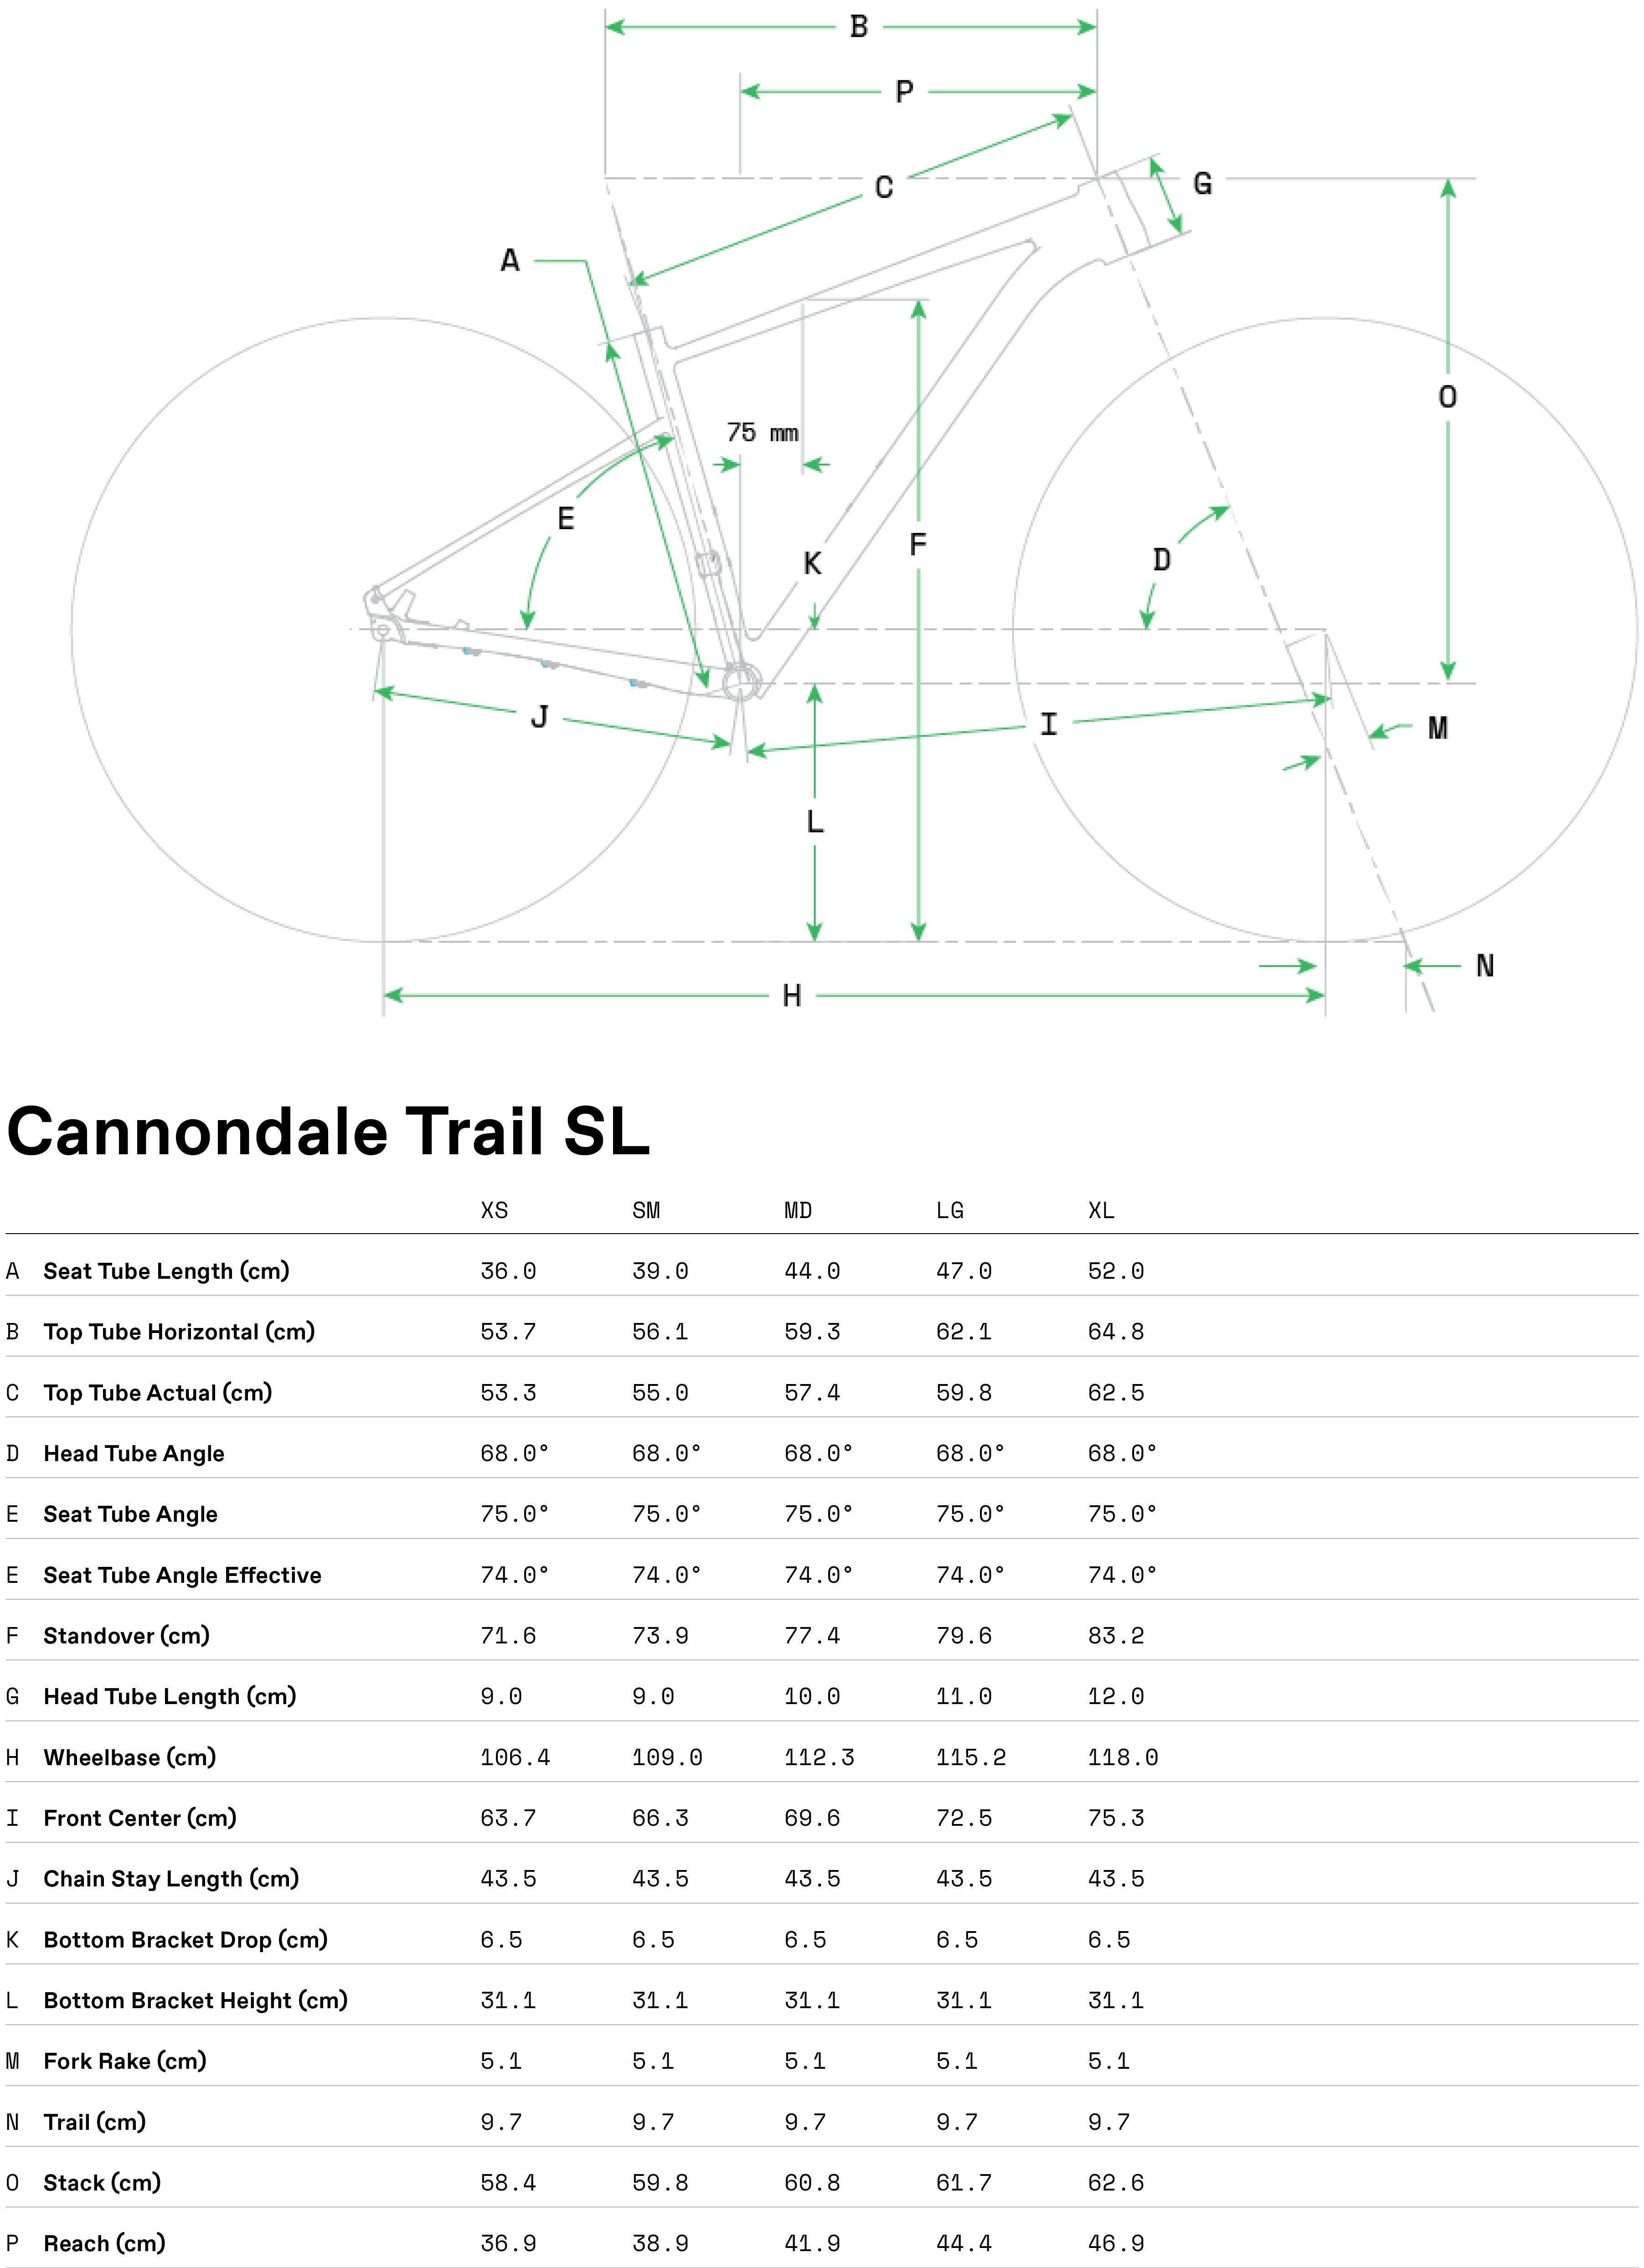 Geometria roweru Cannondale Trail SL